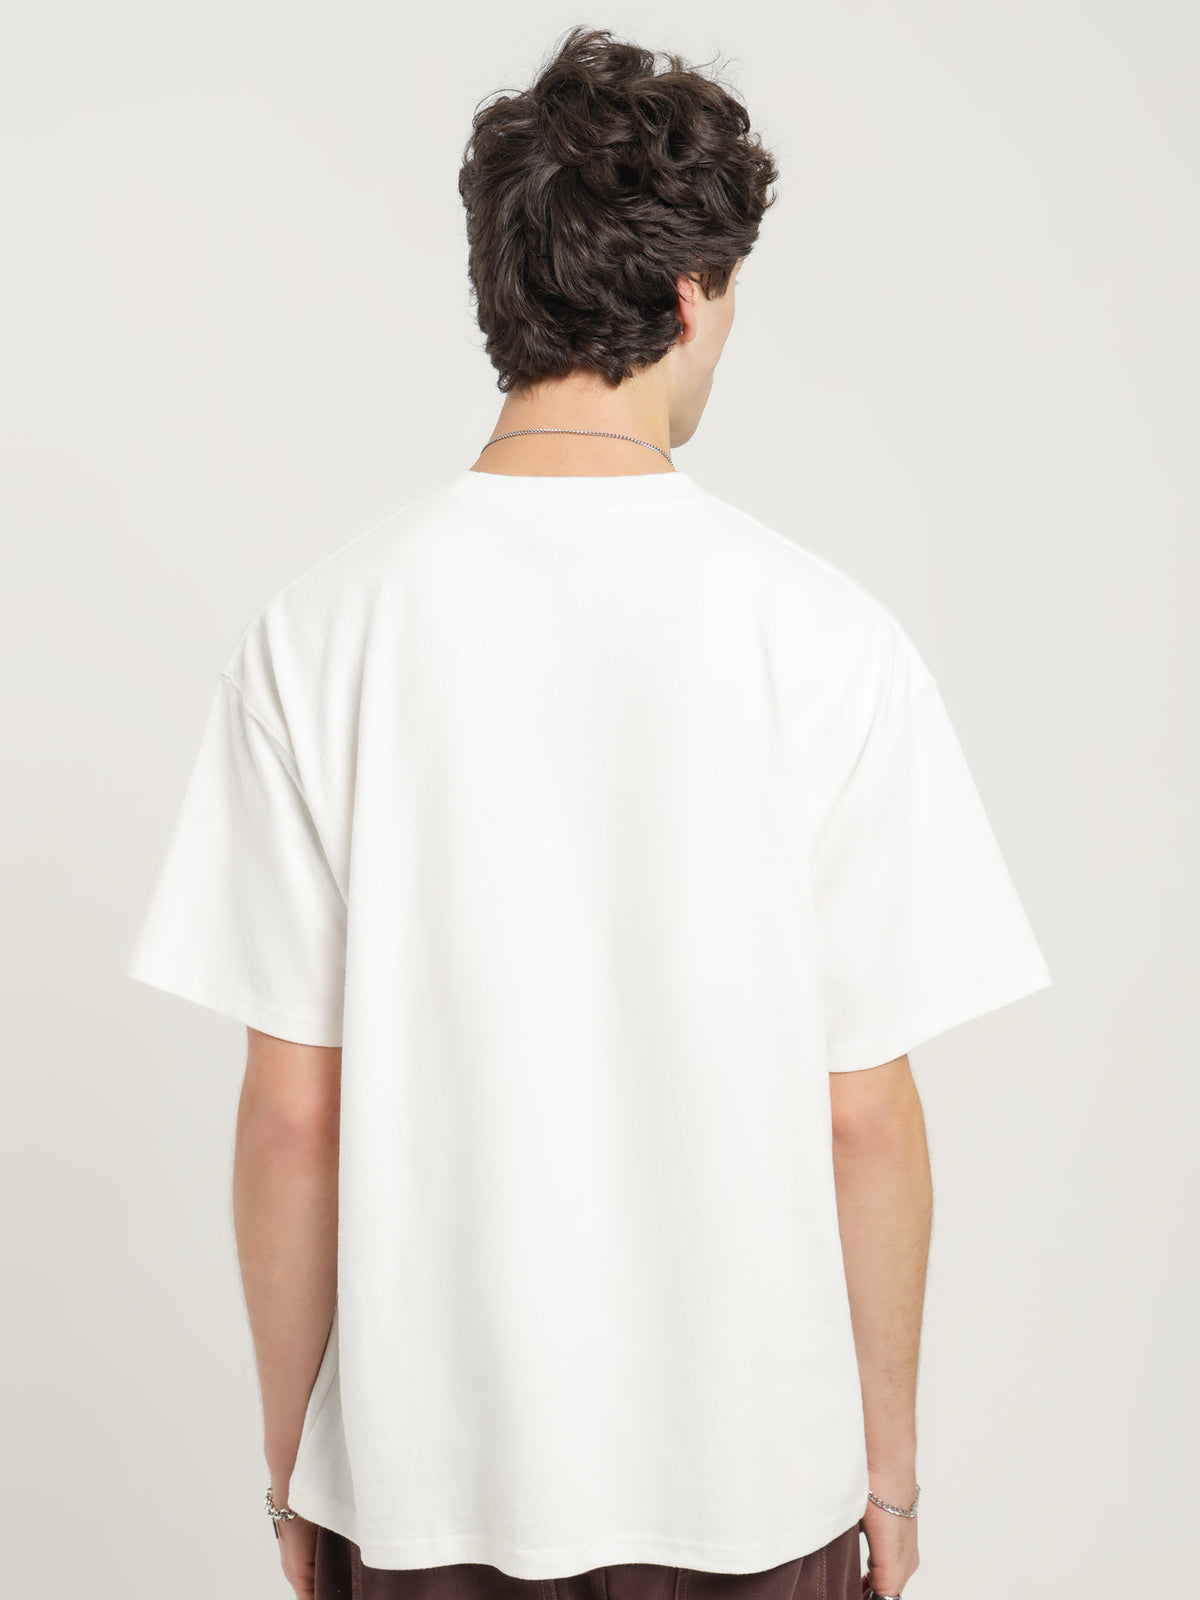 Stiletto T-Shirt in Vintage White